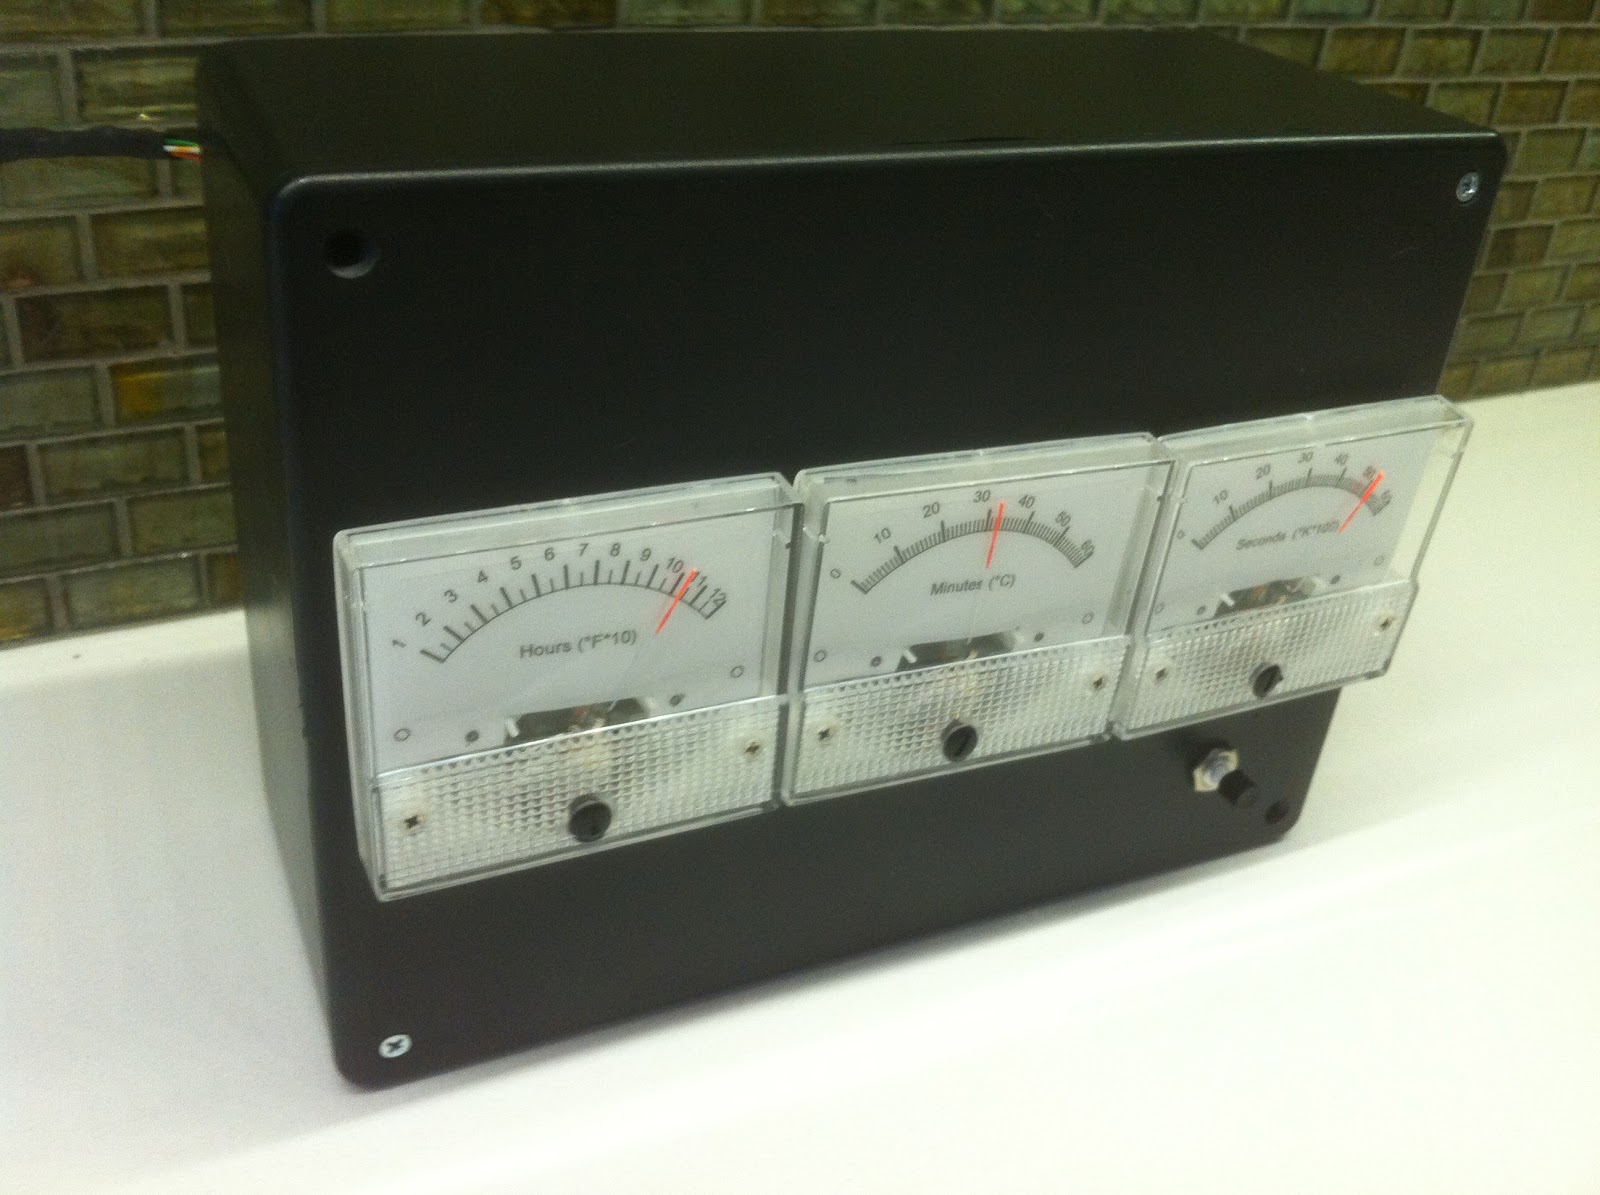 Voltmeter Clock that also displays Temperature